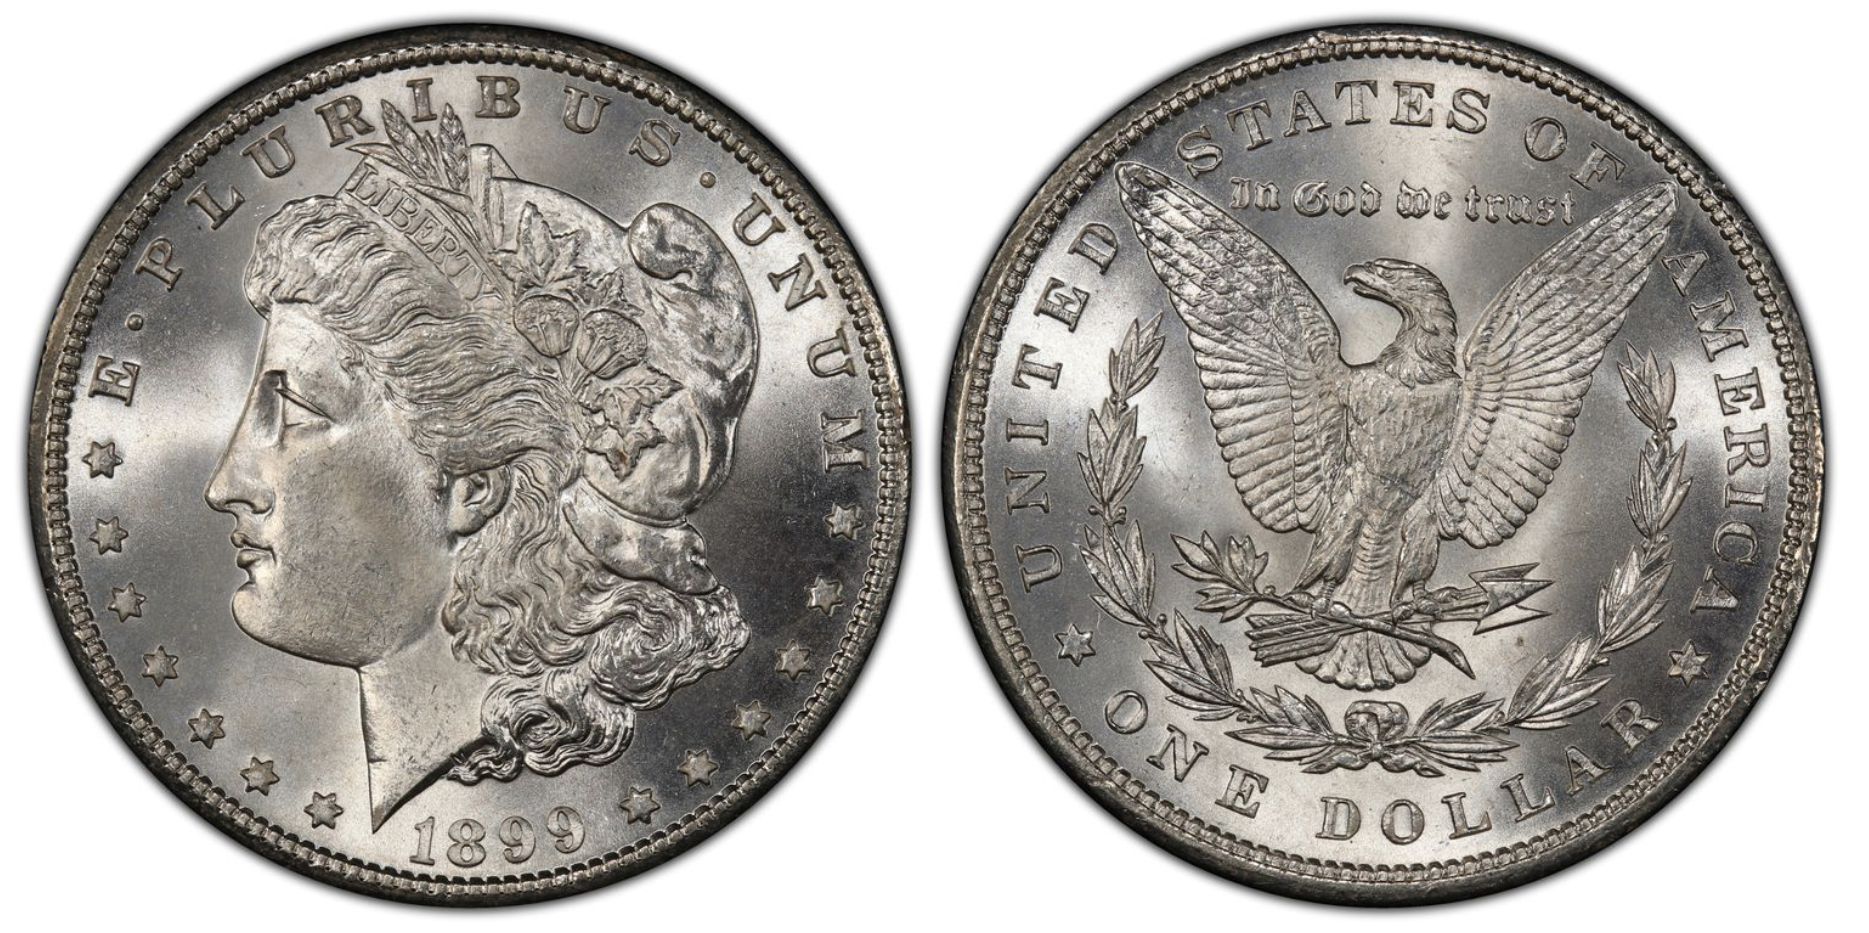 1899 Morgan Silver Dollar value	